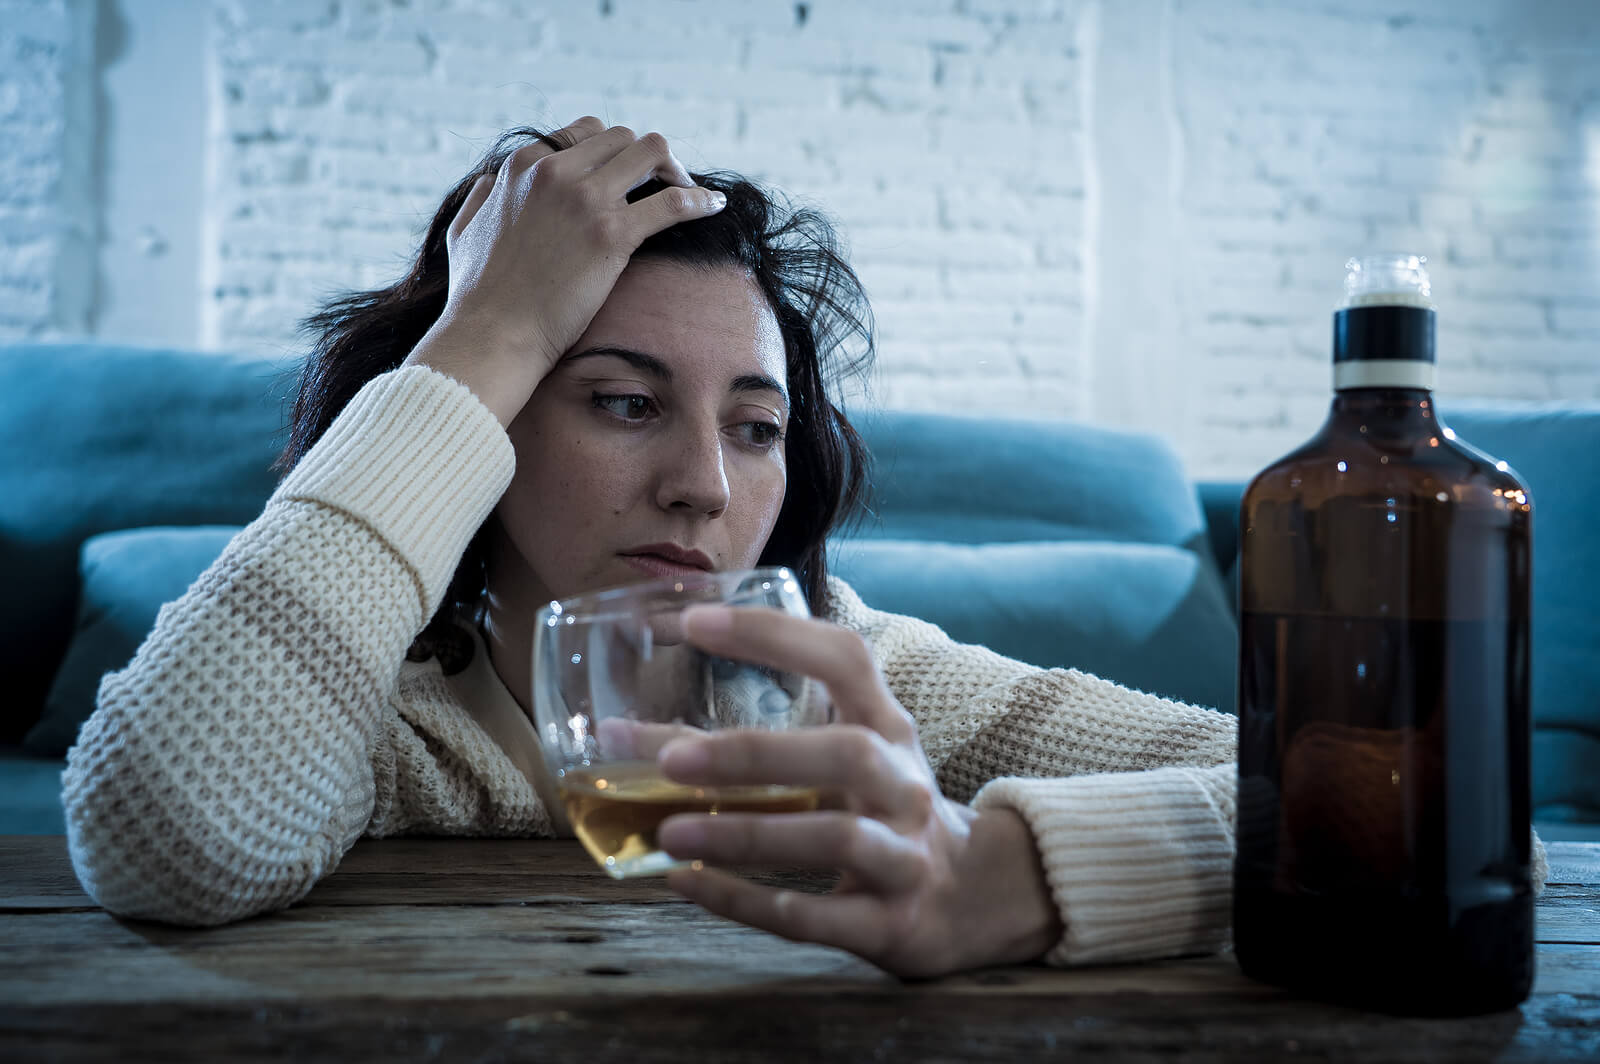 Mujer bebiendo alcohol sin parar; sufre alcoholismo materno.